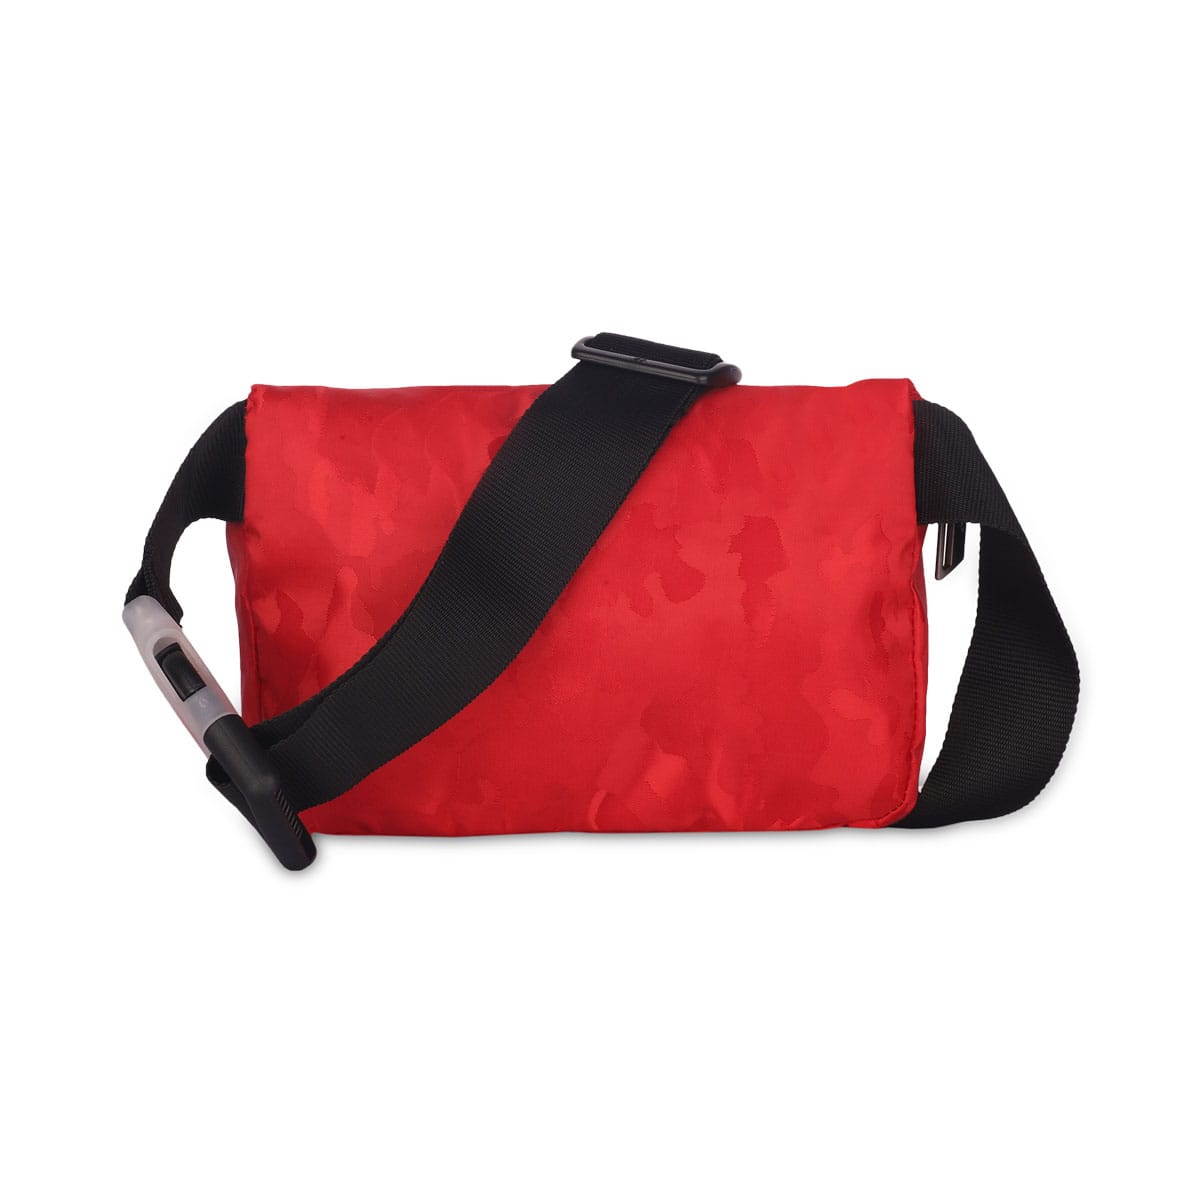 Red | Protecta Debut Waist Bag-Main